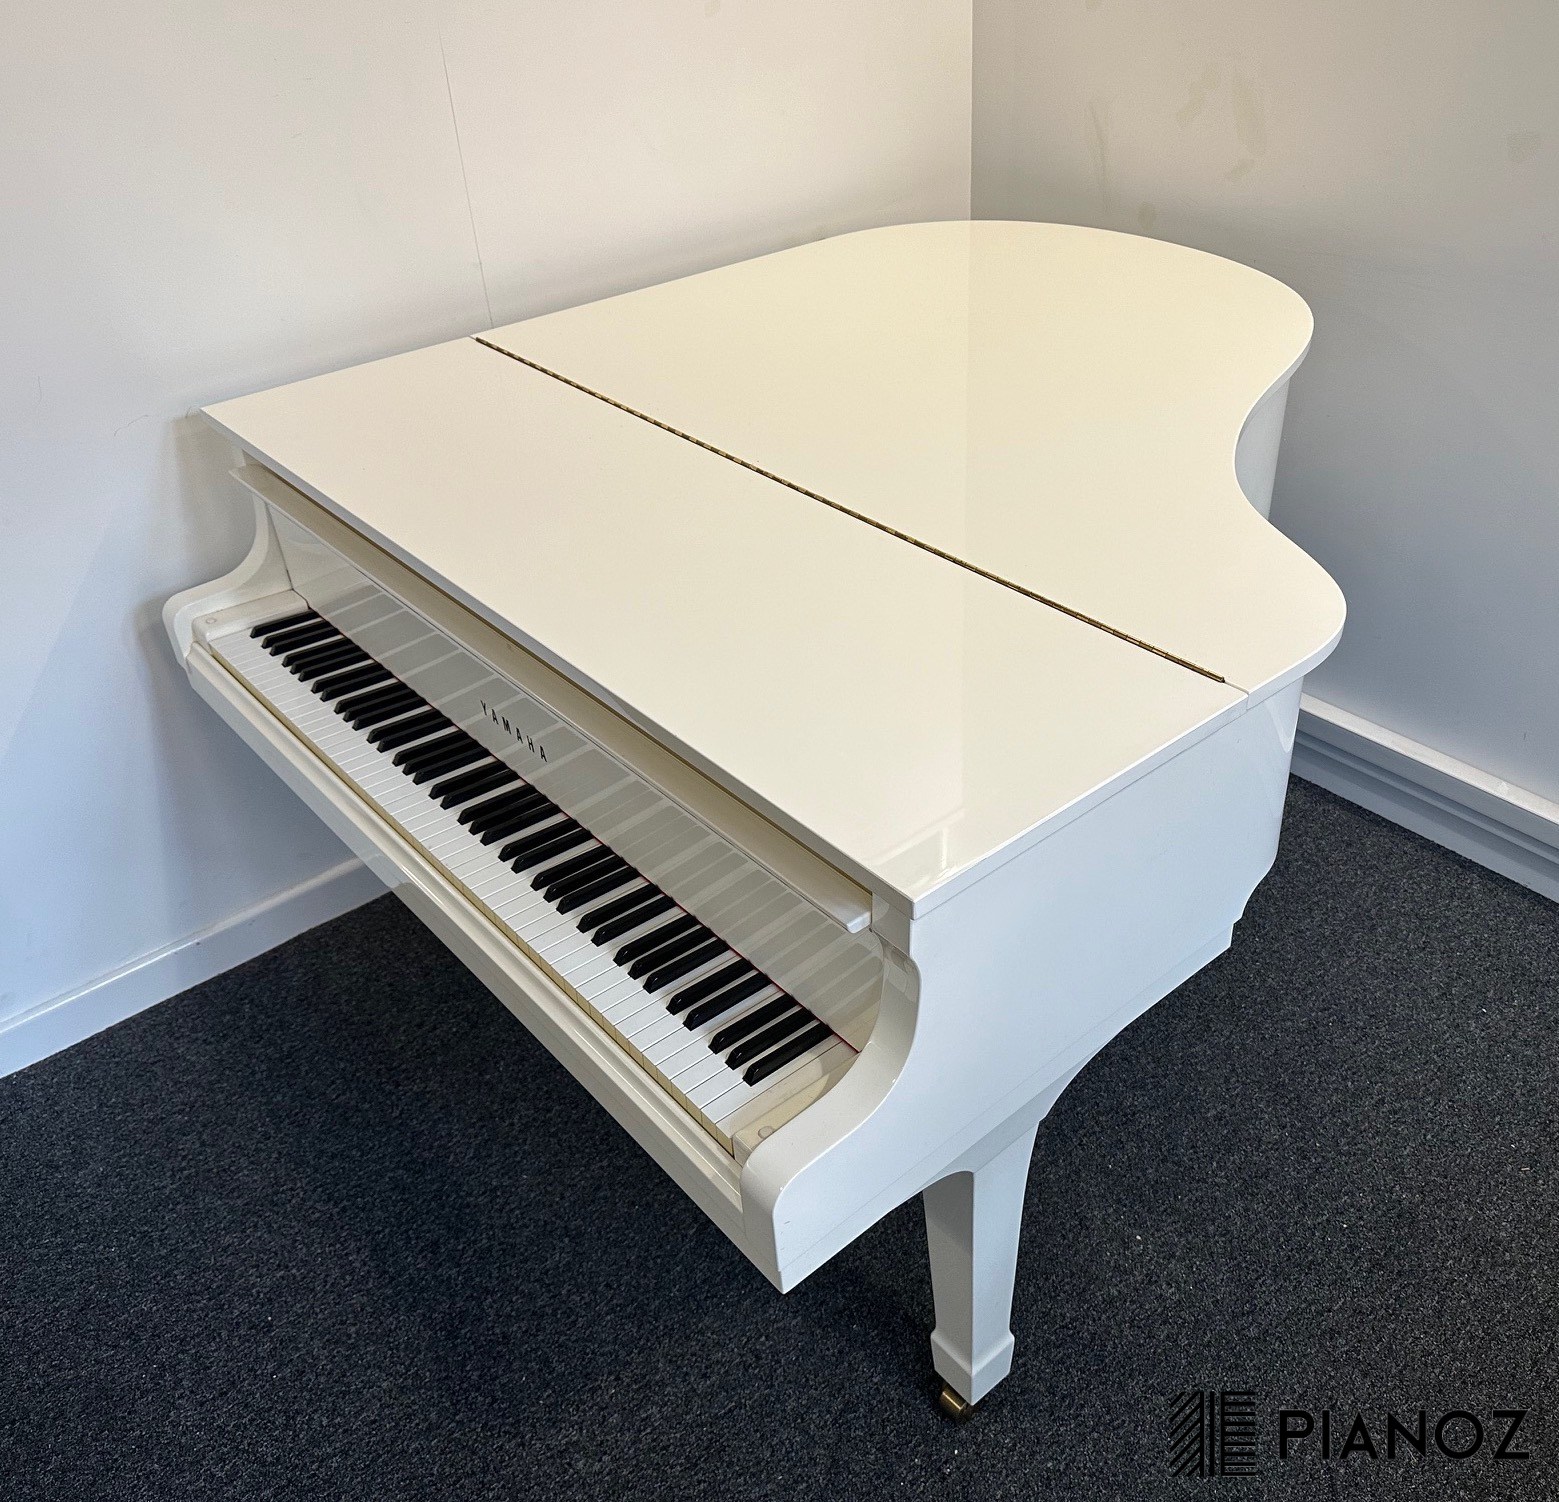 Yamaha G2 Japanese White Baby Grand Piano piano for sale in UK